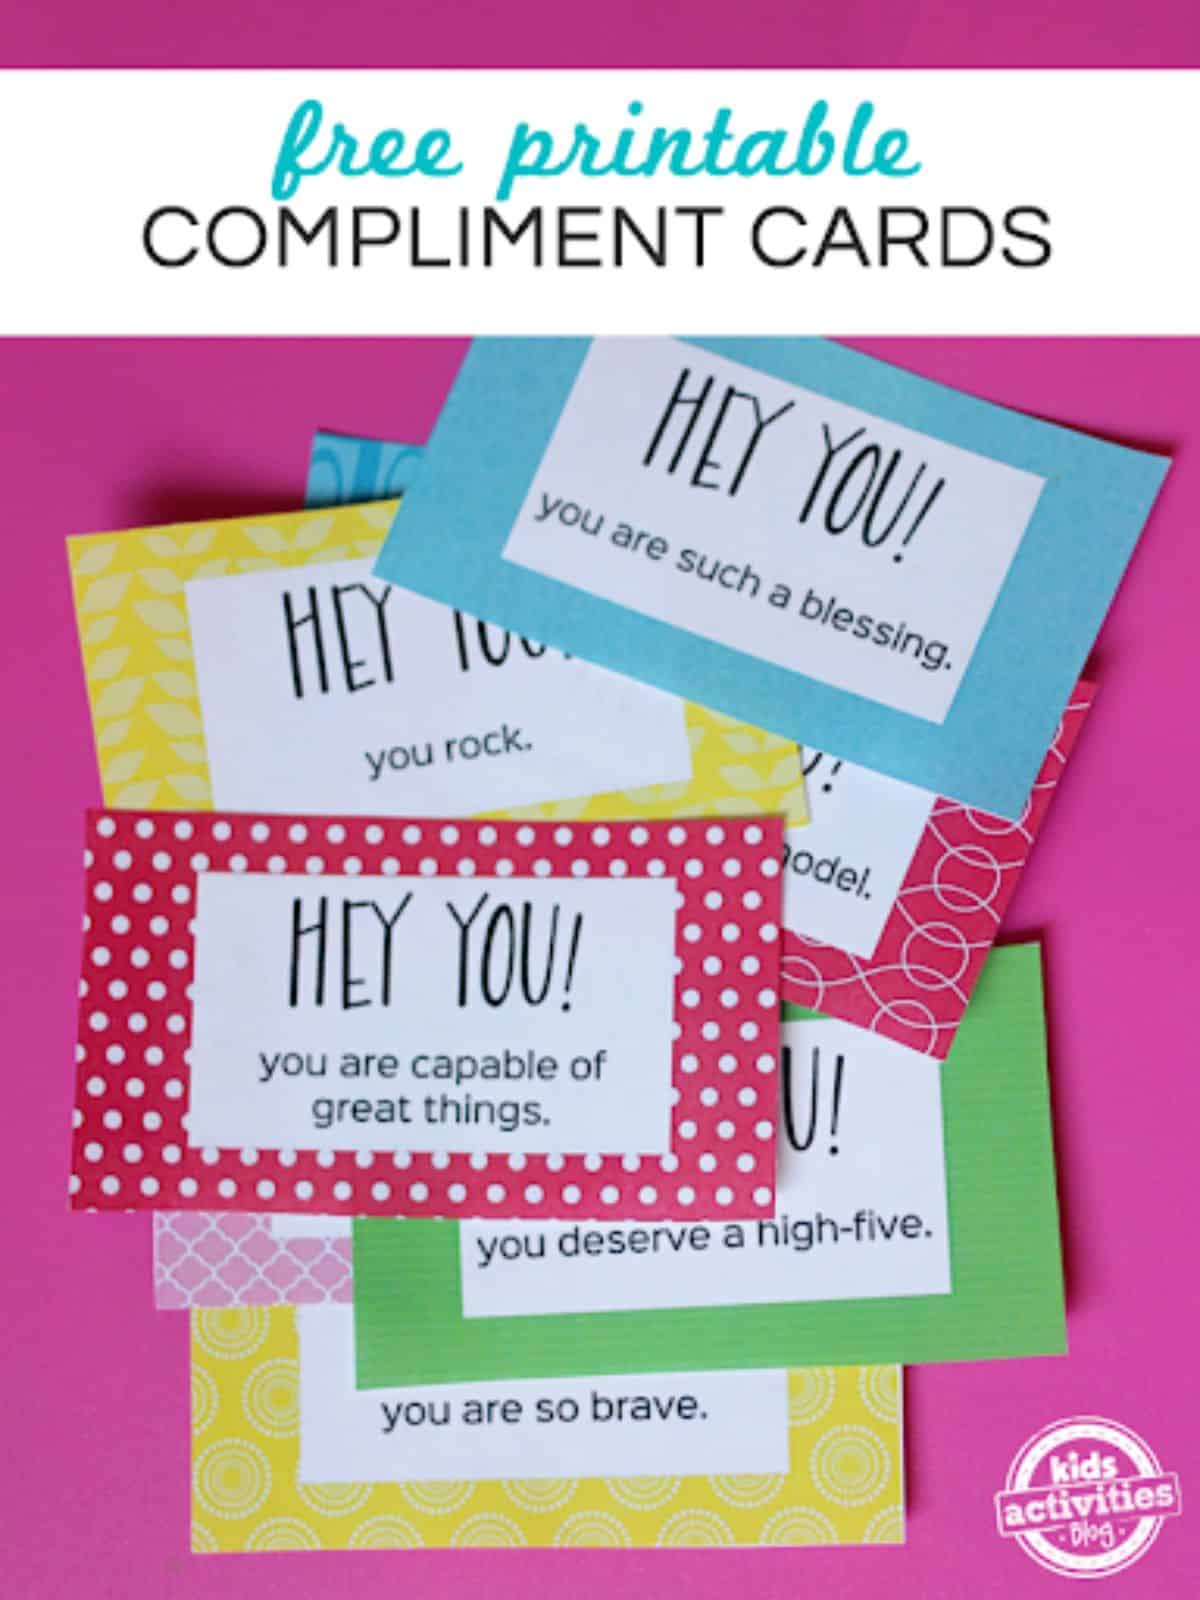 Kindness Cards